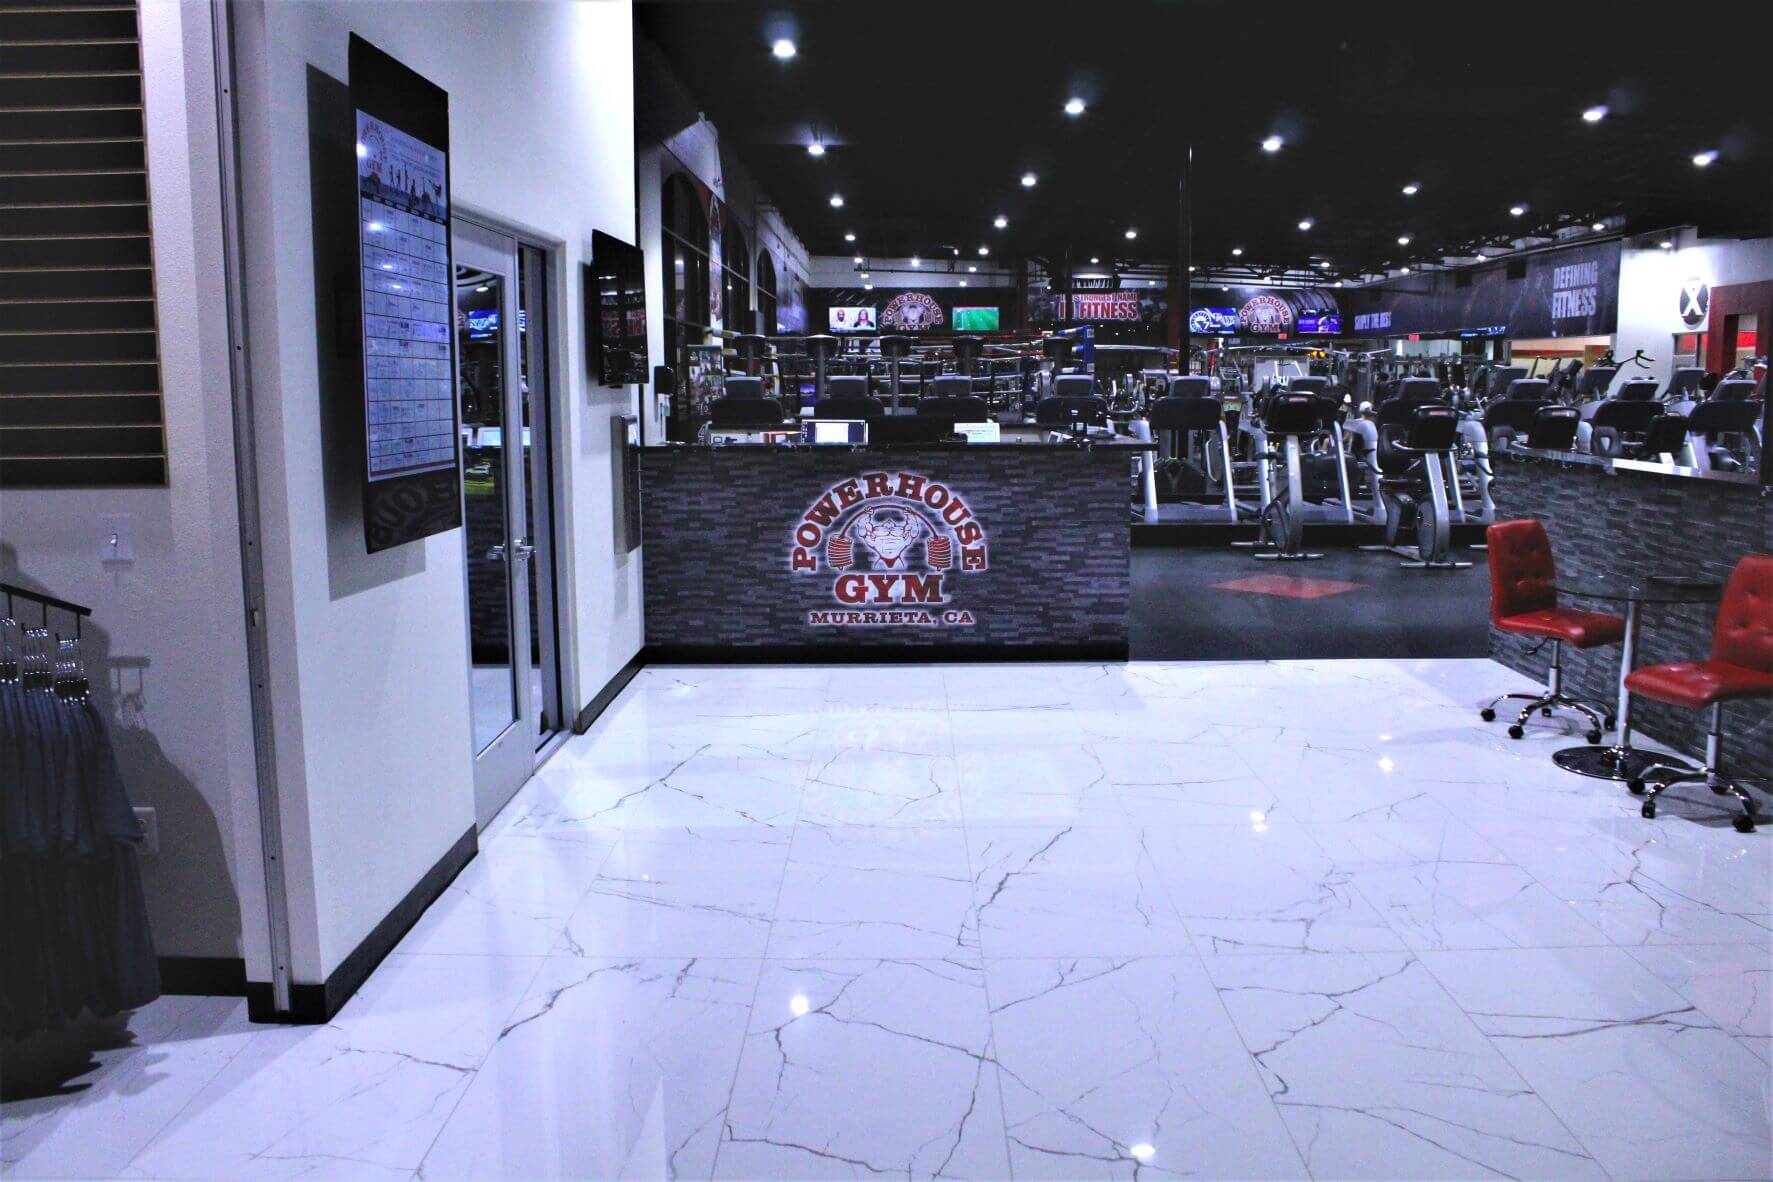 An Thumbnail Image of the Murrieta, CA Powerhouse Gym Location